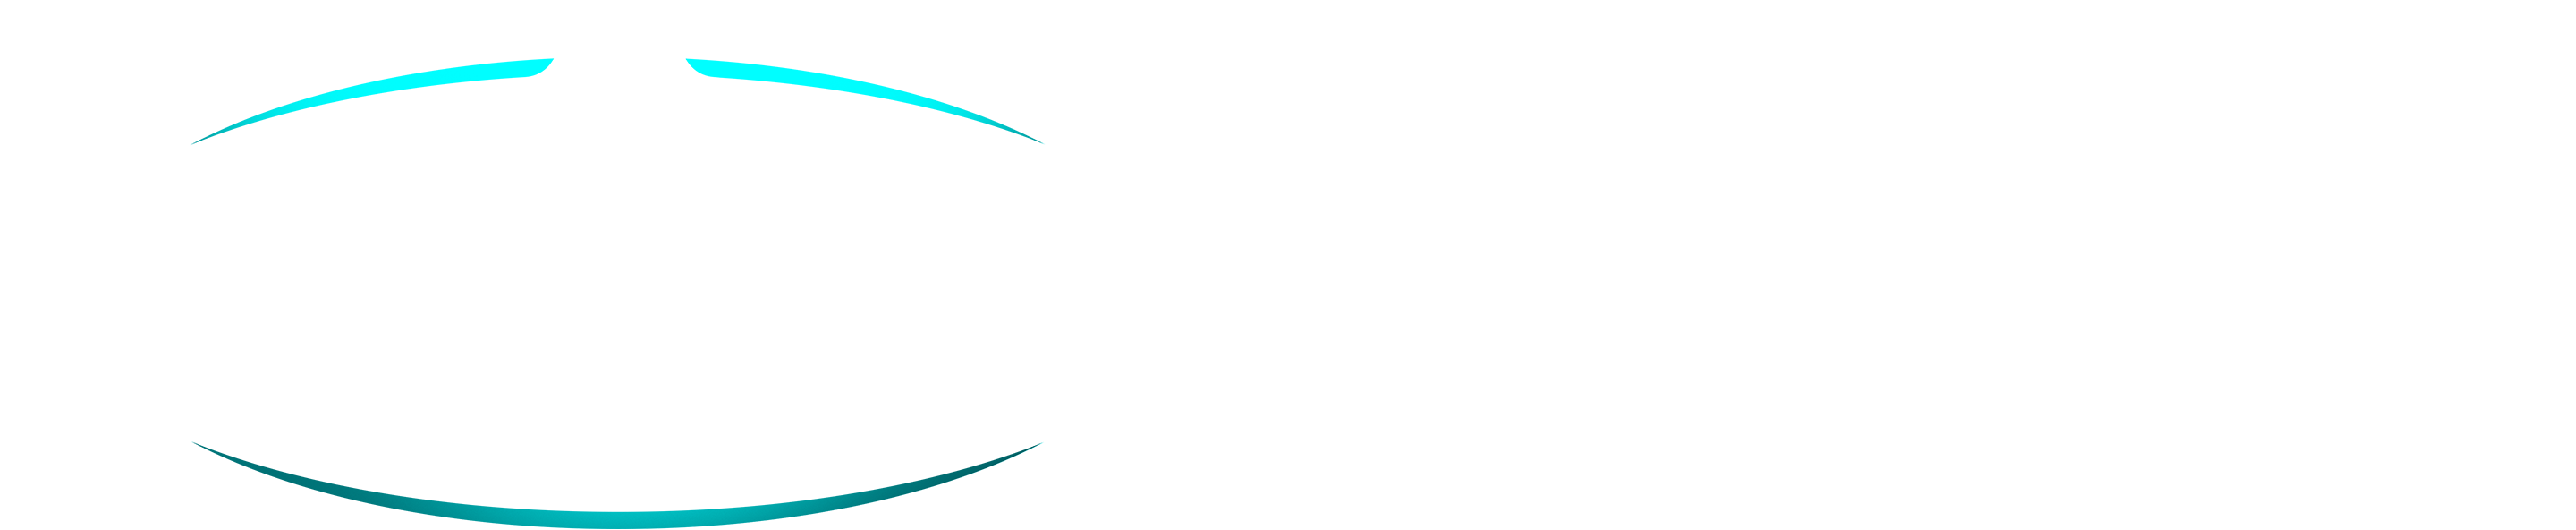 Tony Hawk's Pro Skater 1 + 2 PS4 MÍDIA DIGITAL - Raimundogamer midia digital